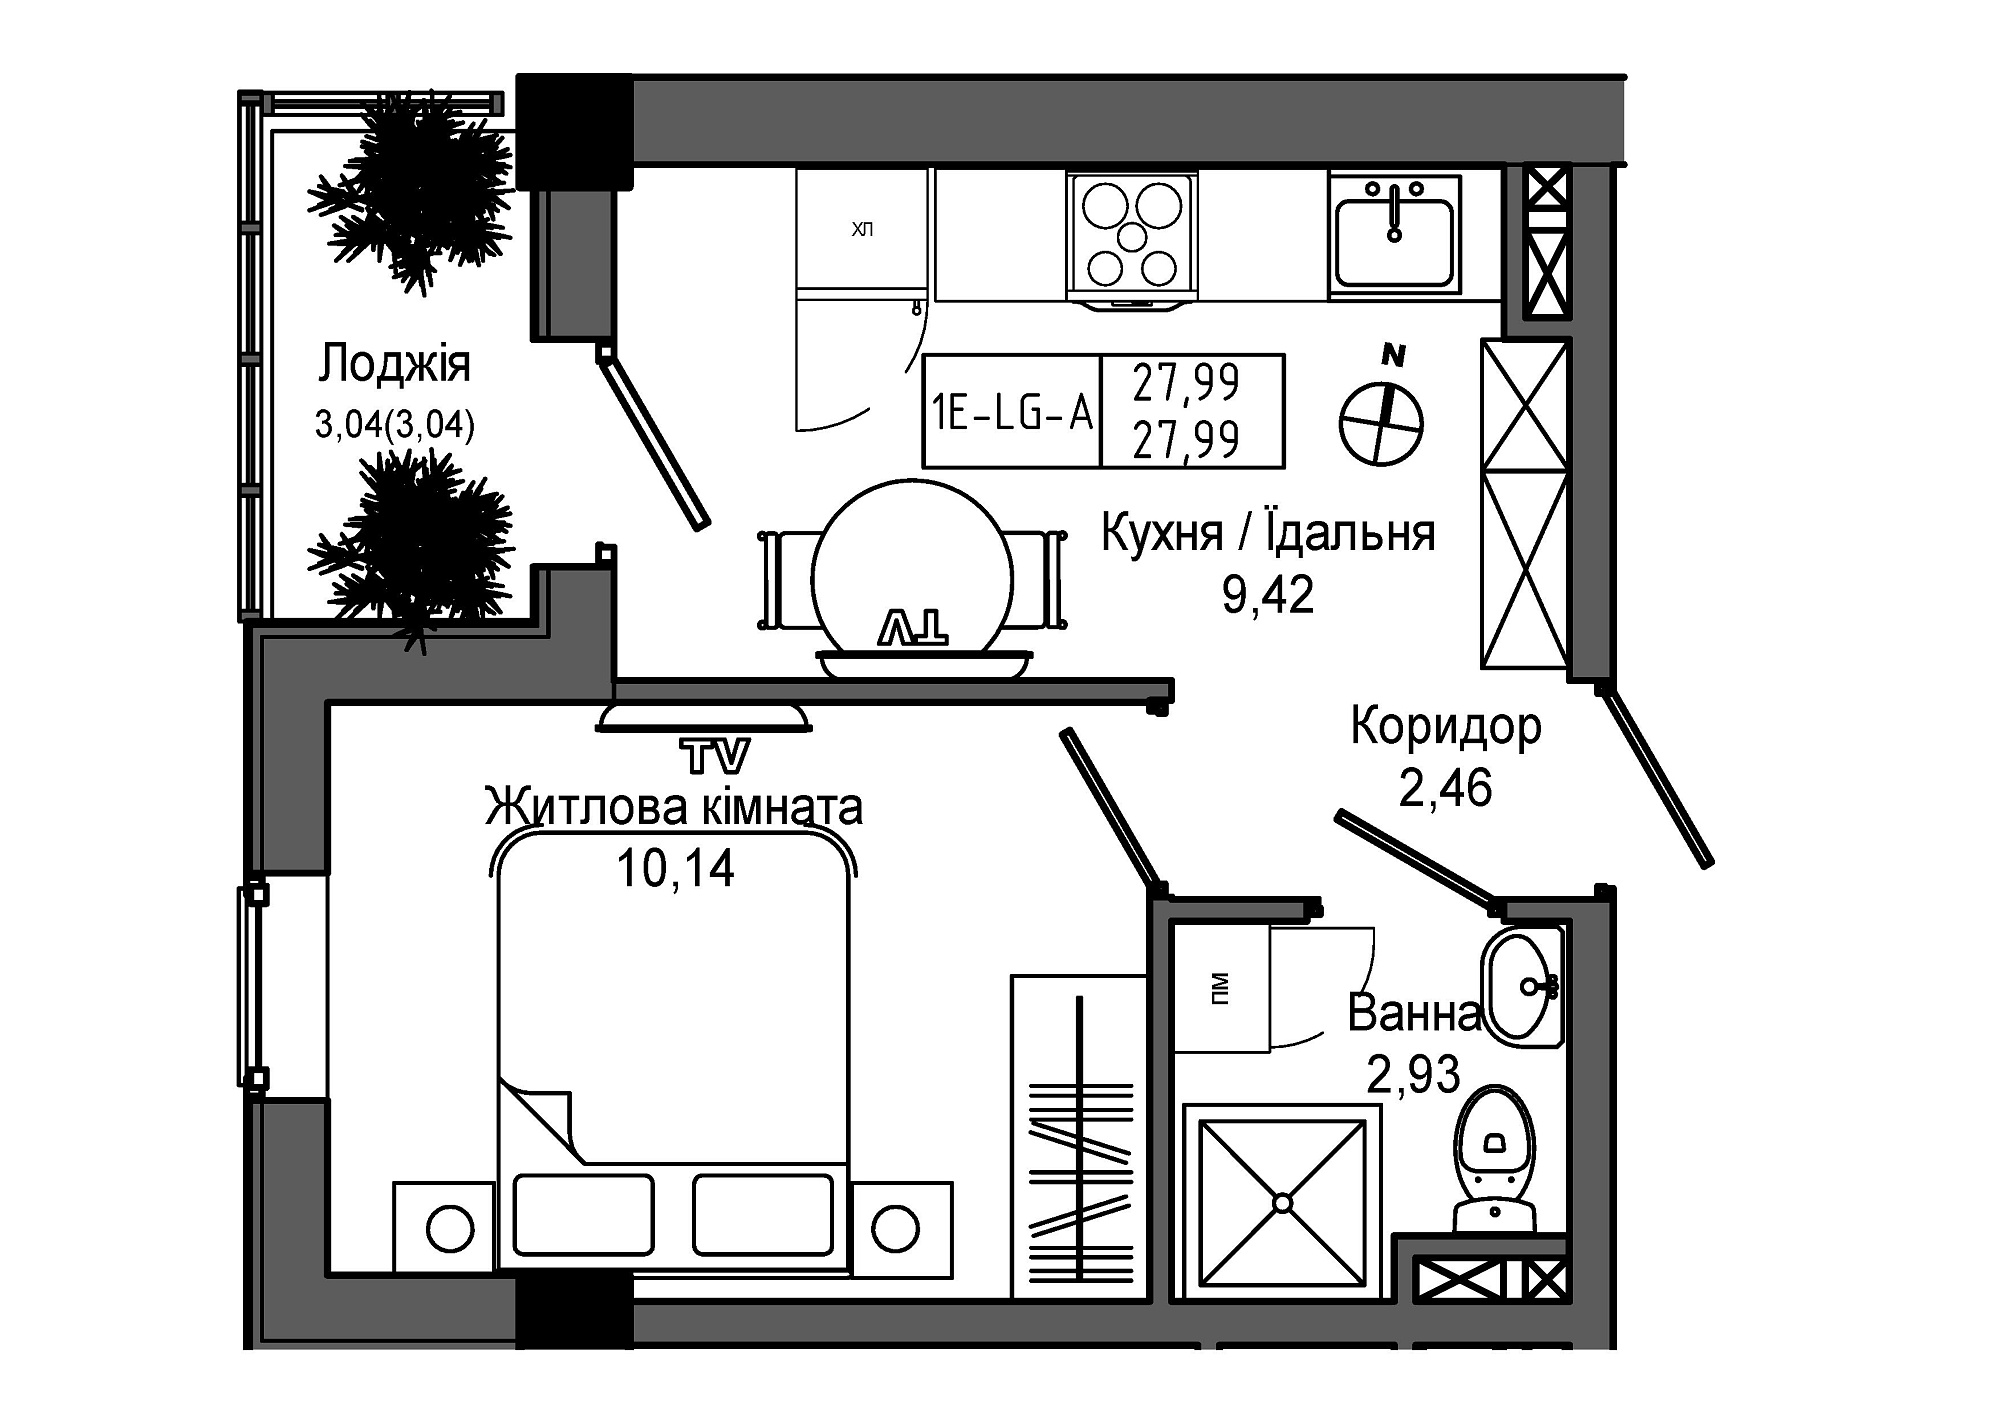 Planning 1-rm flats area 27.99m2, UM-006-00/0012.